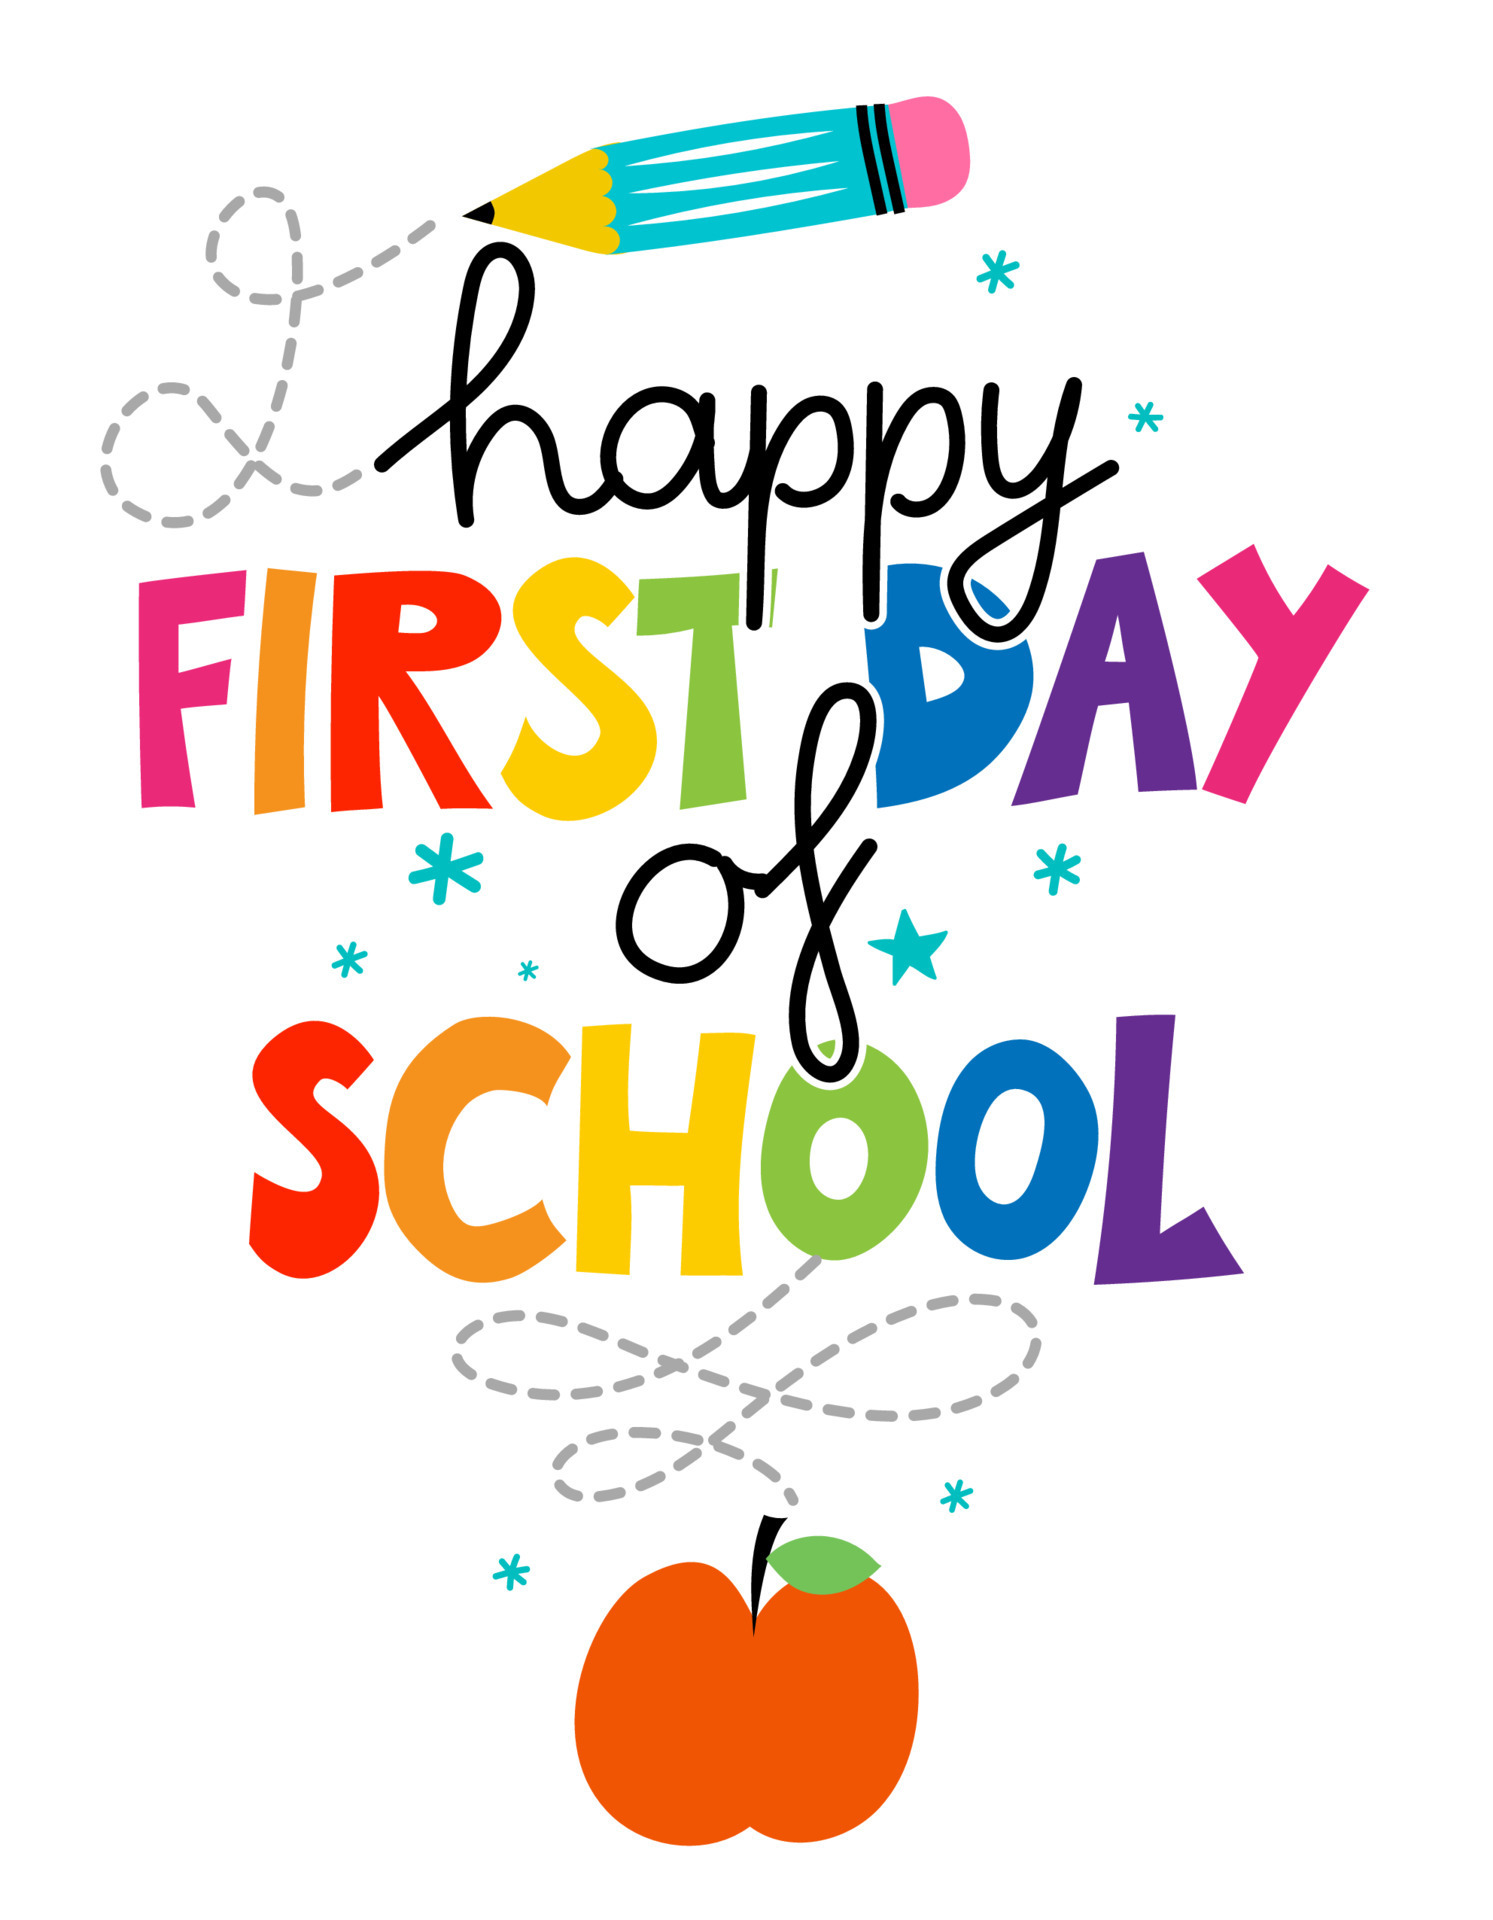 The First Day of School is Aug. 30th St. Aloysius Gonzaga School